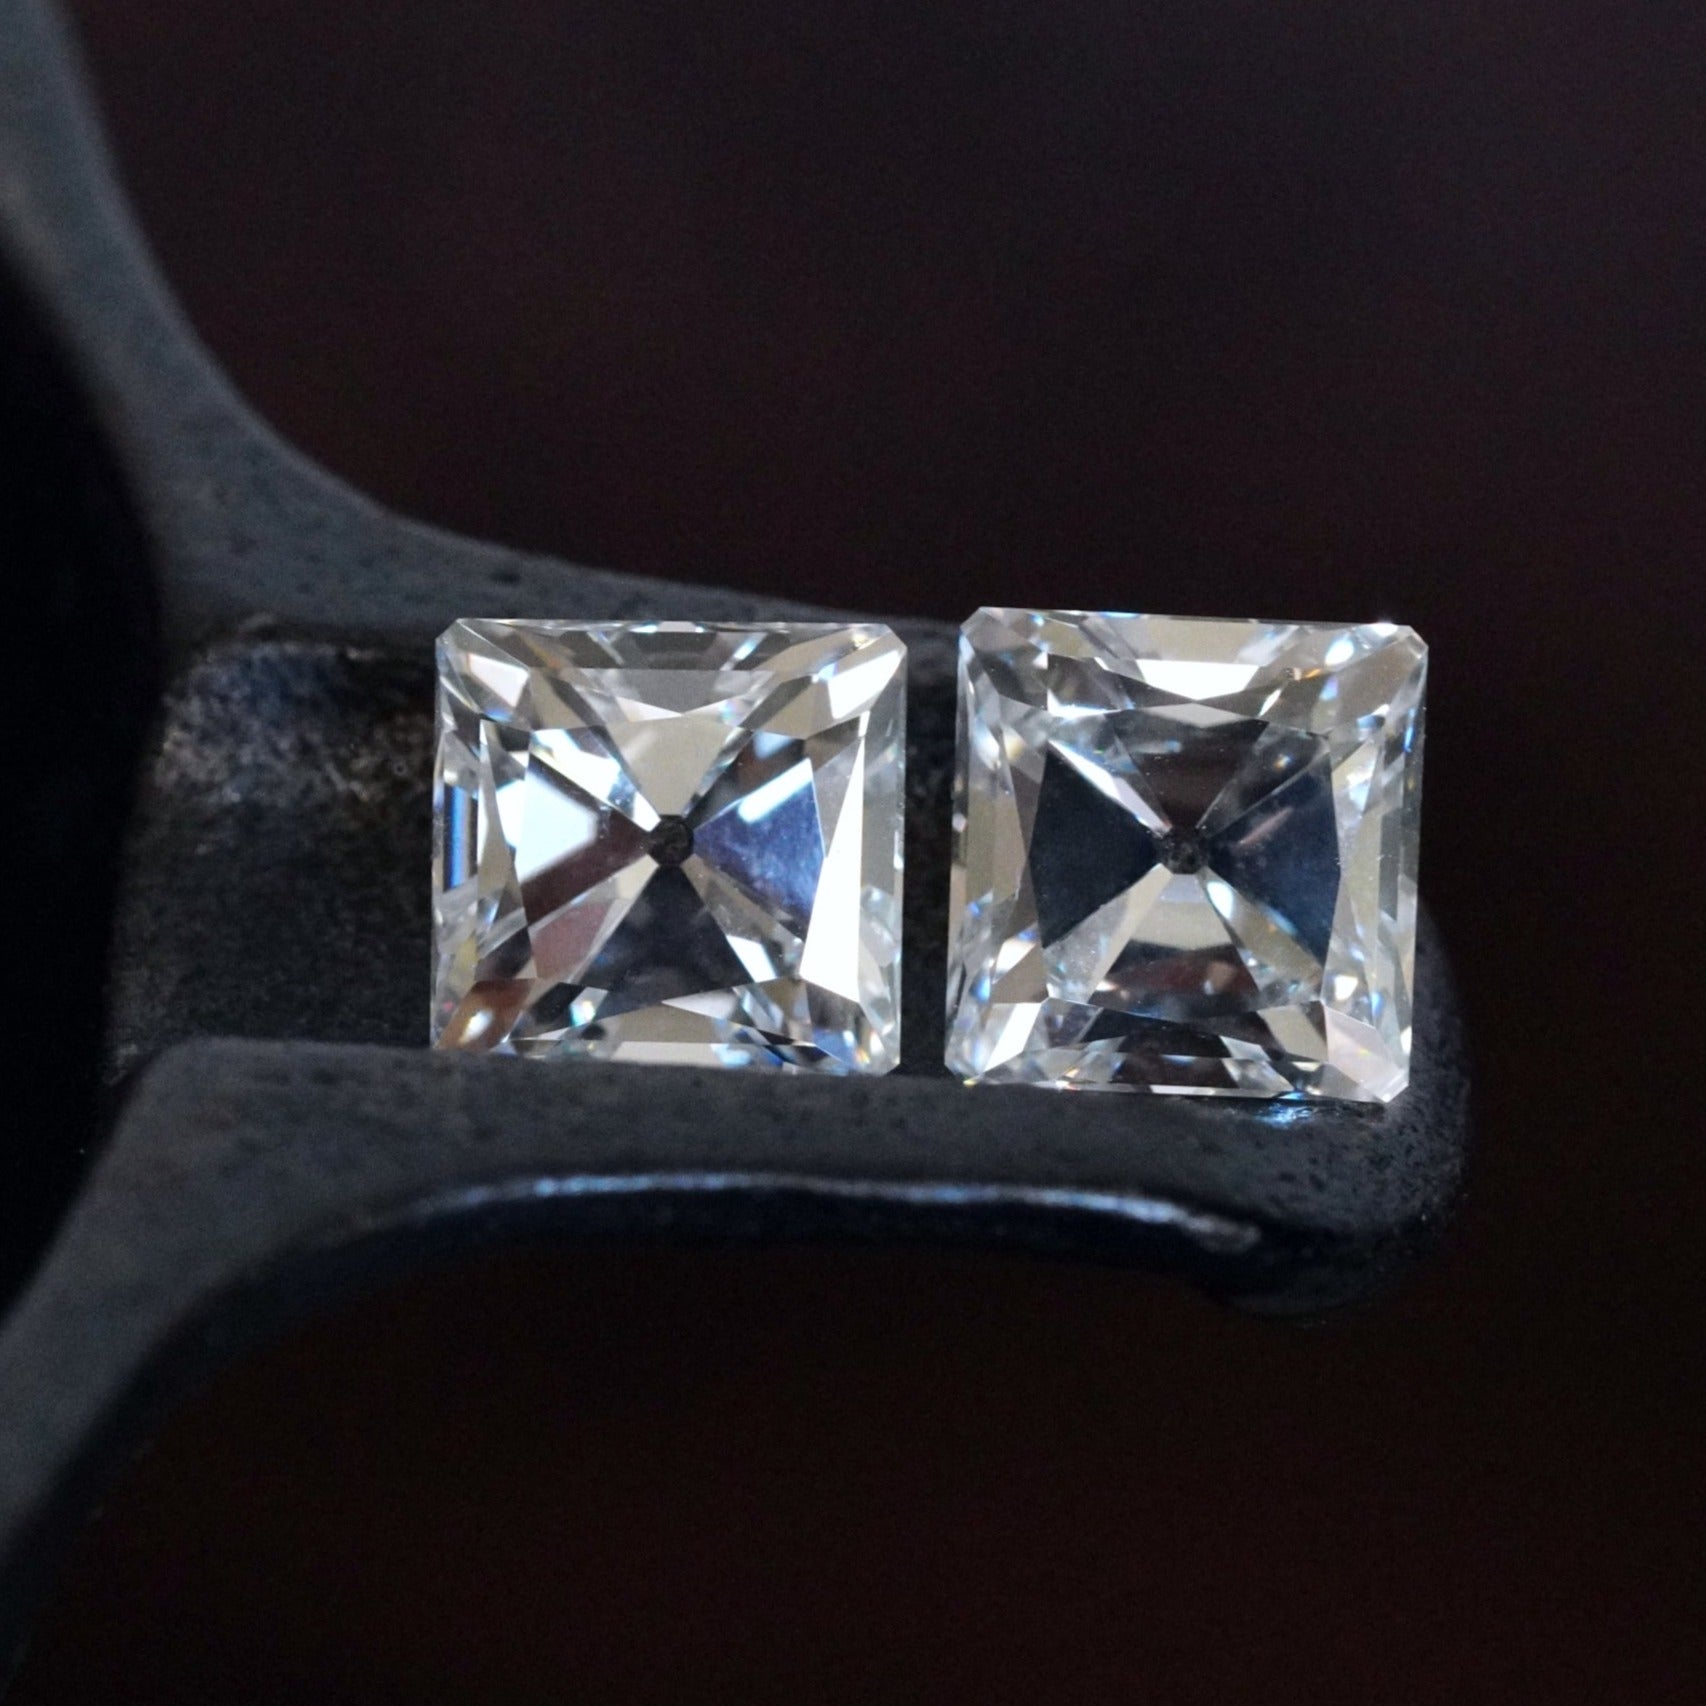 Pair of 3.11-CT French Cut Diamonds